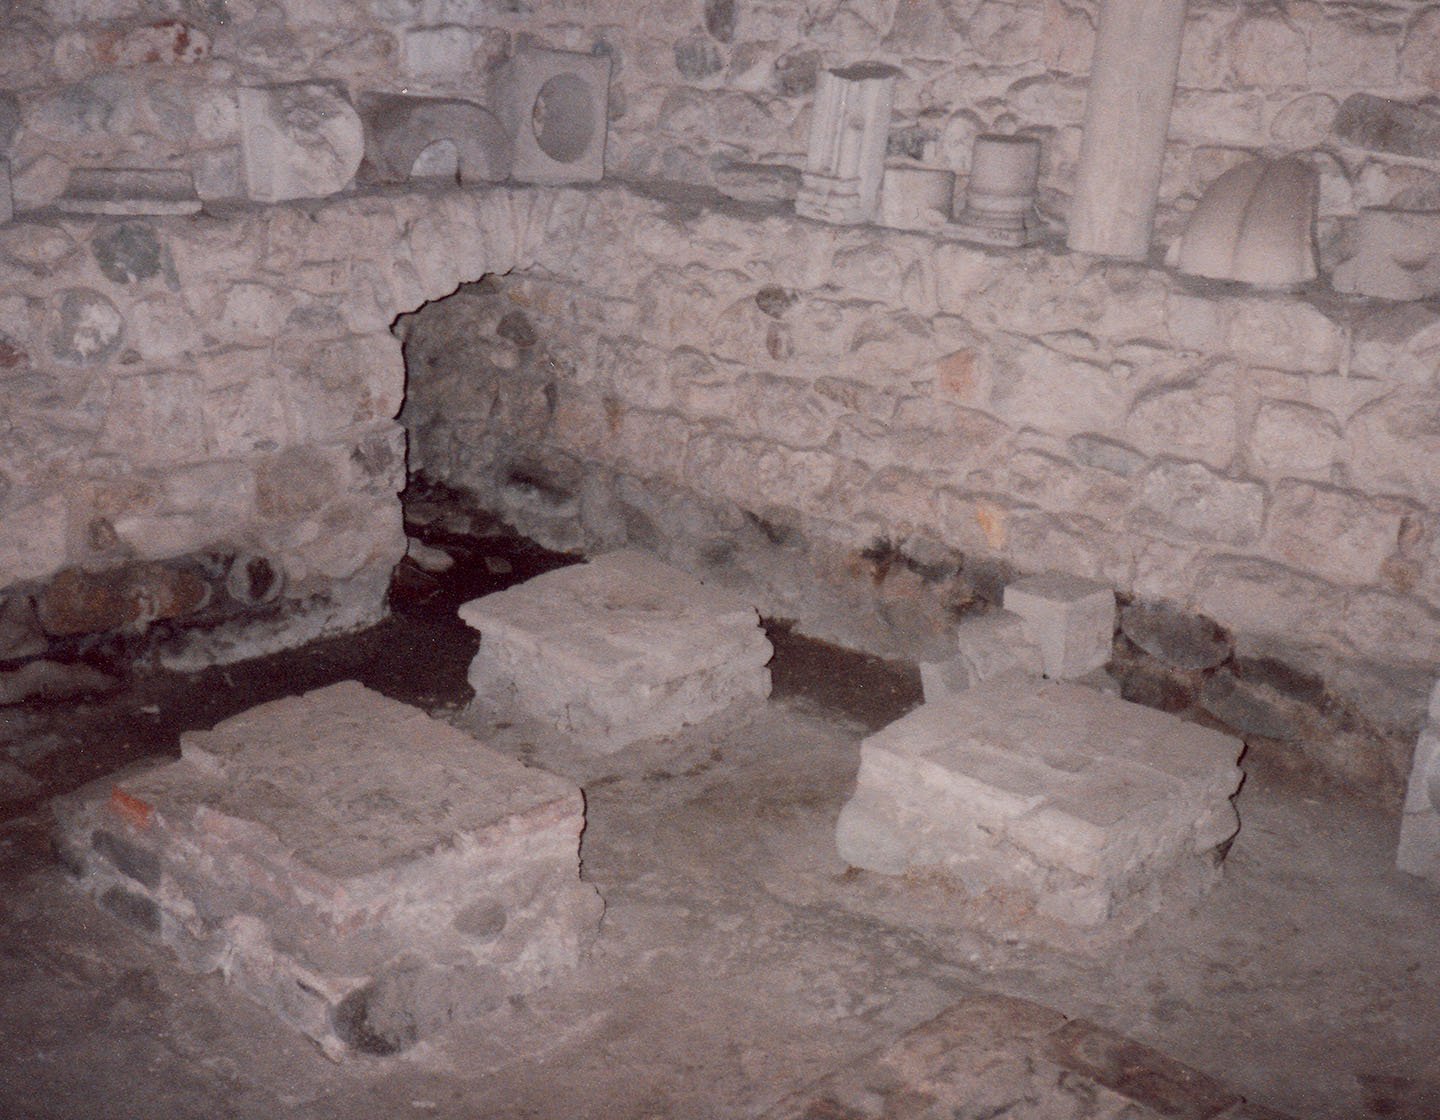 A corner of the caldarium in the ‘Arab baths’ in Gerona, Spain